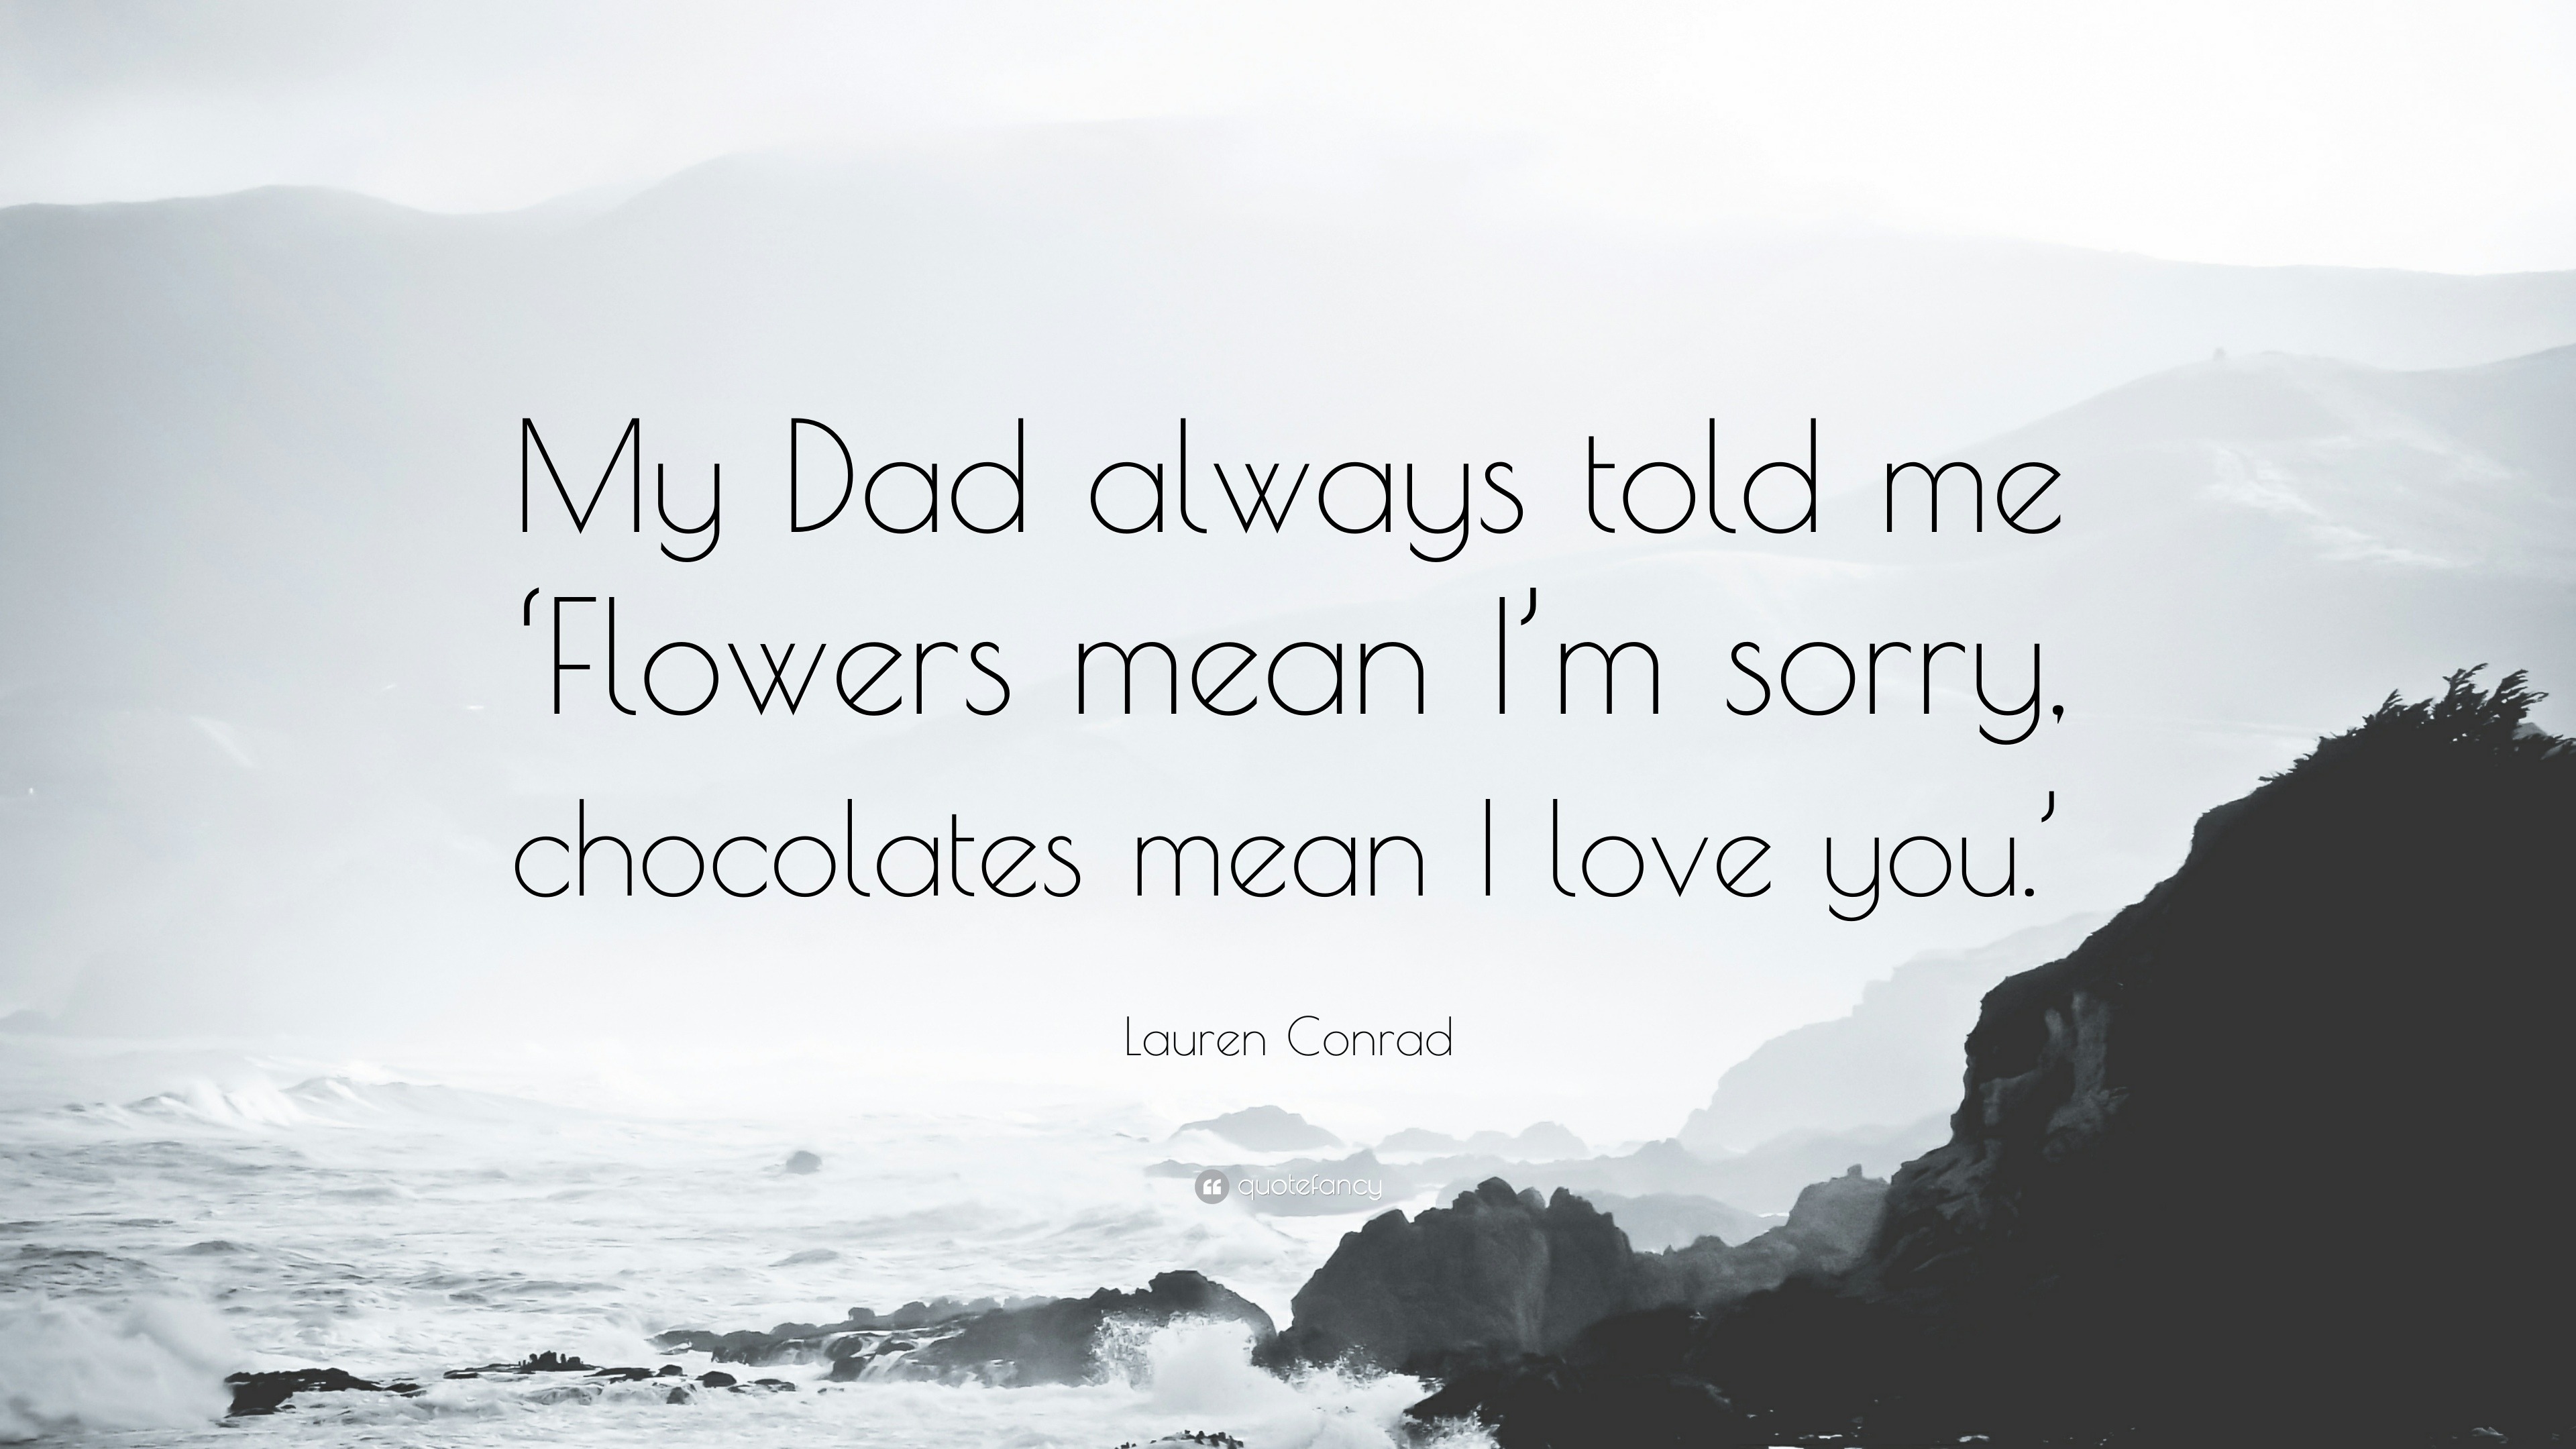 Lauren Conrad Quote “My Dad always told me Flowers mean I m